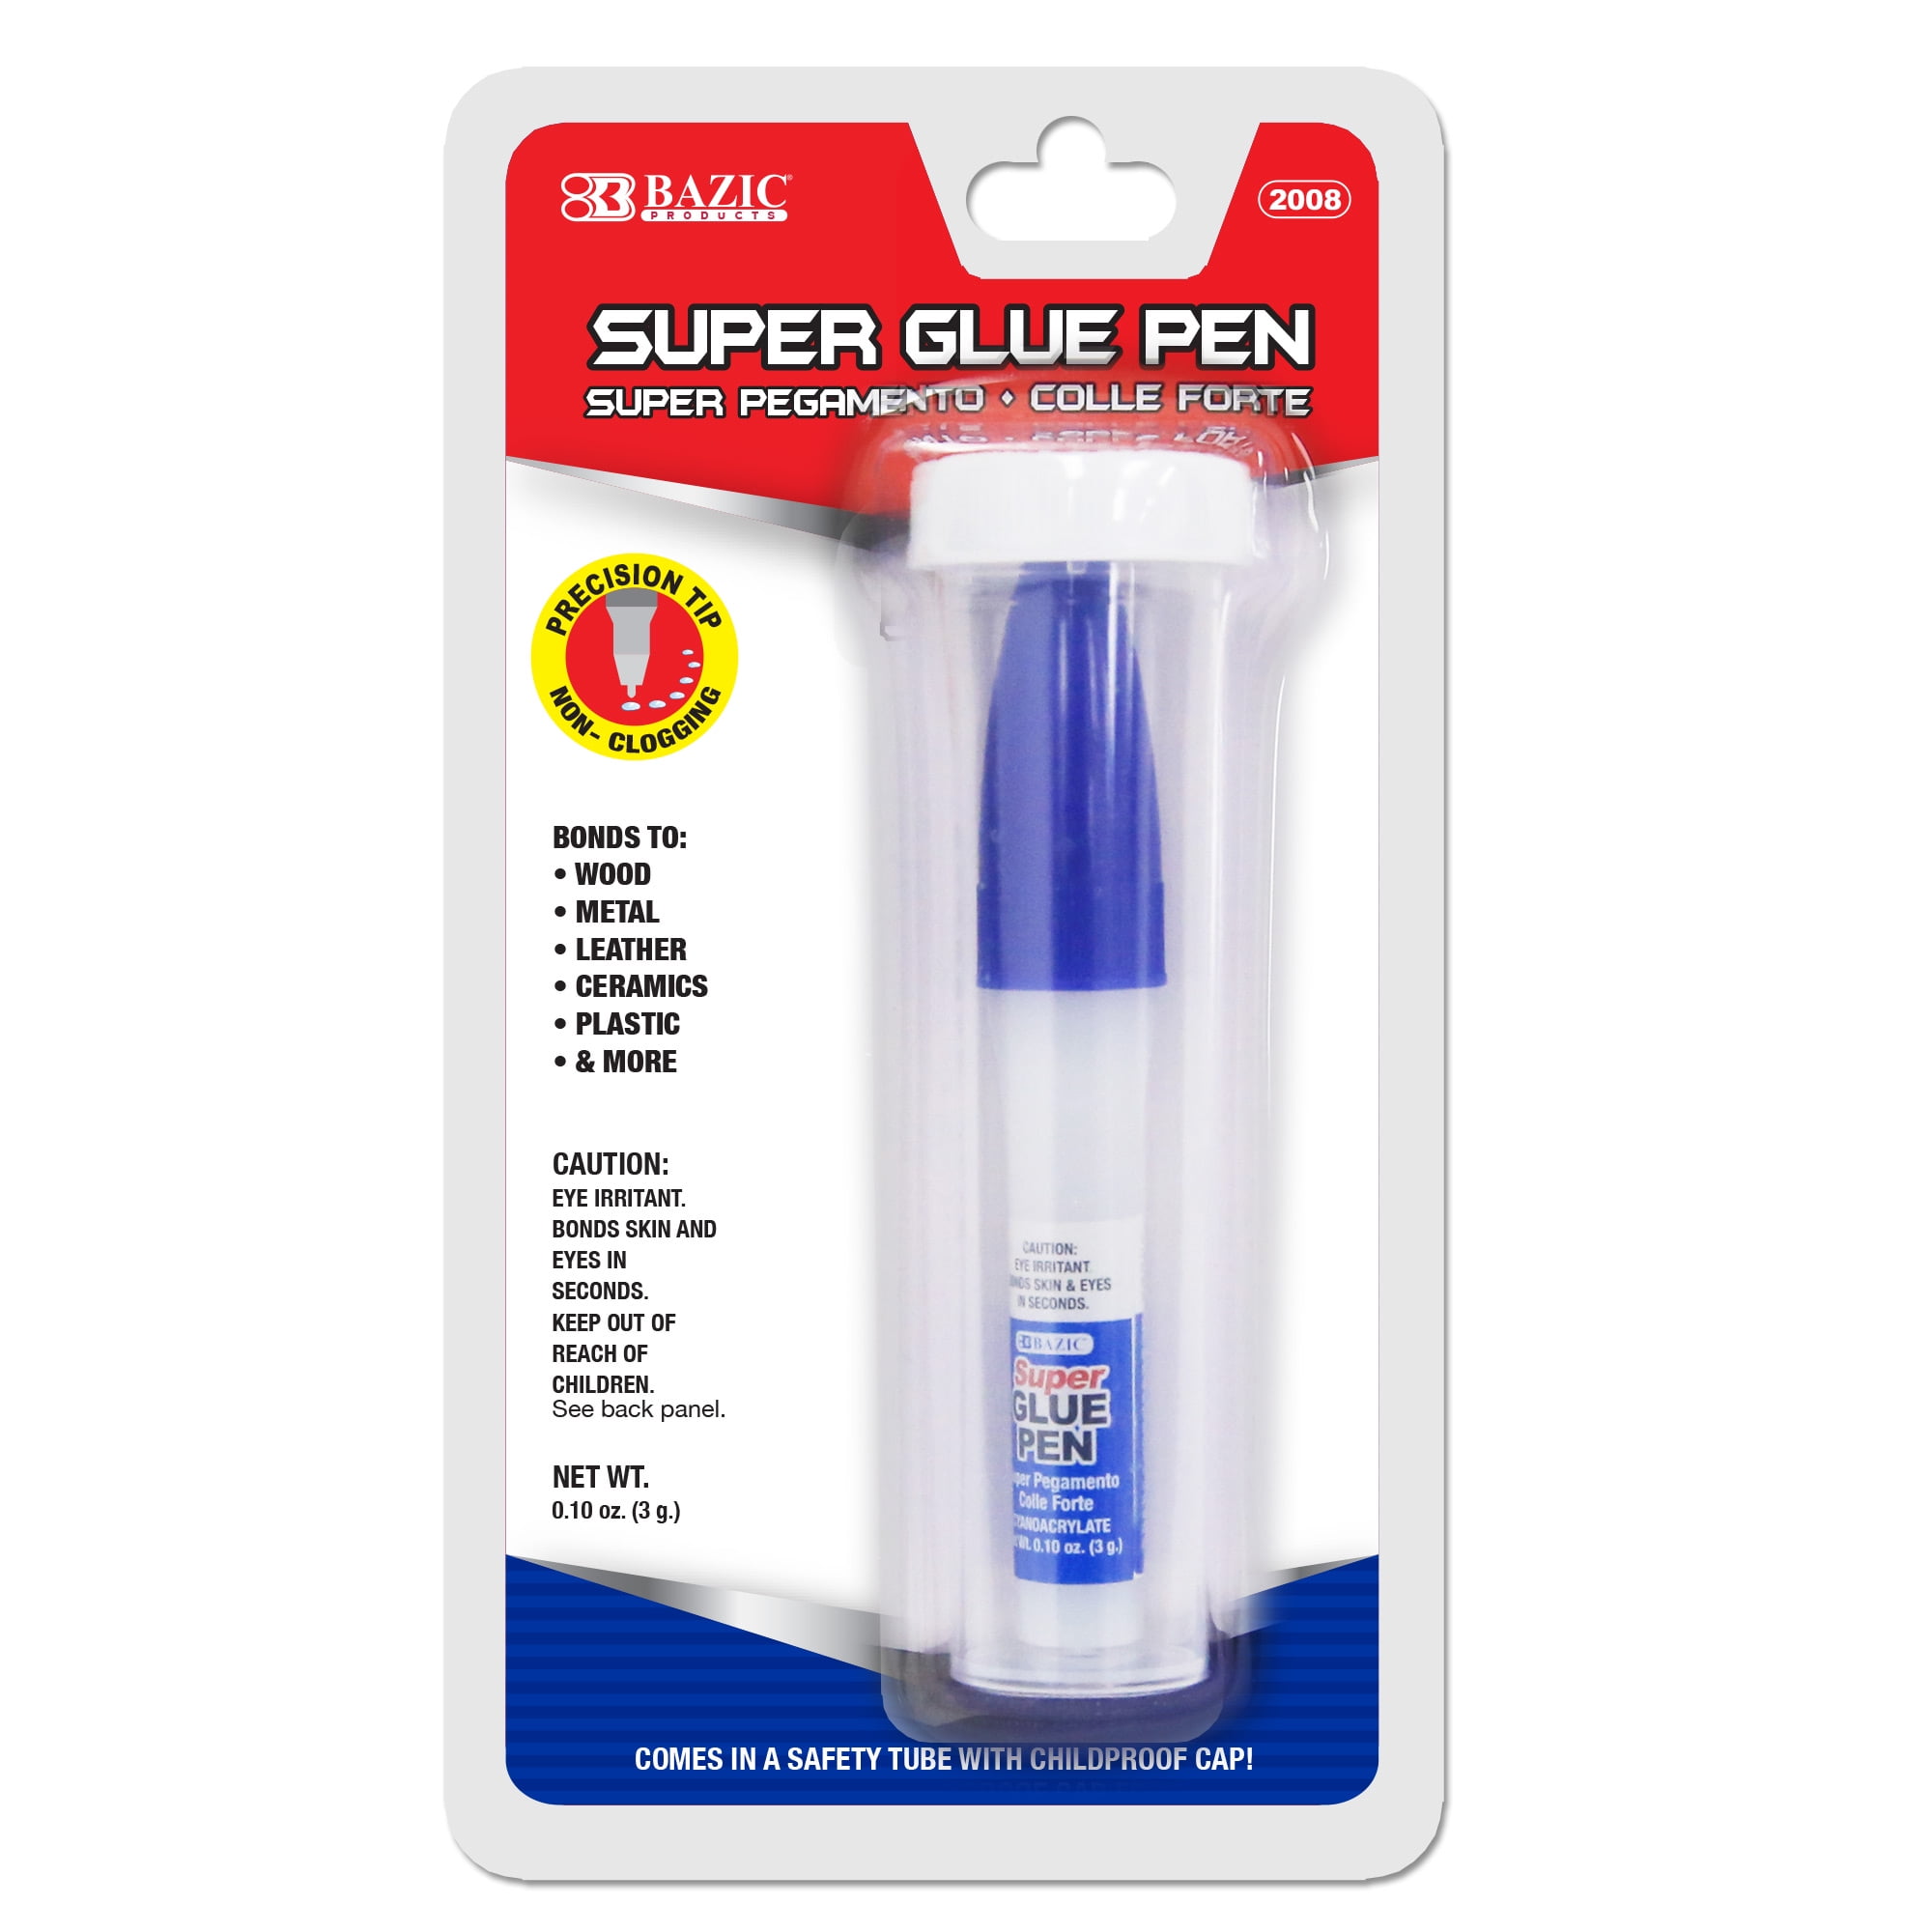 Pen+Gear Washable School Glue, White, 4 oz, 118ml, 0.271 lb 